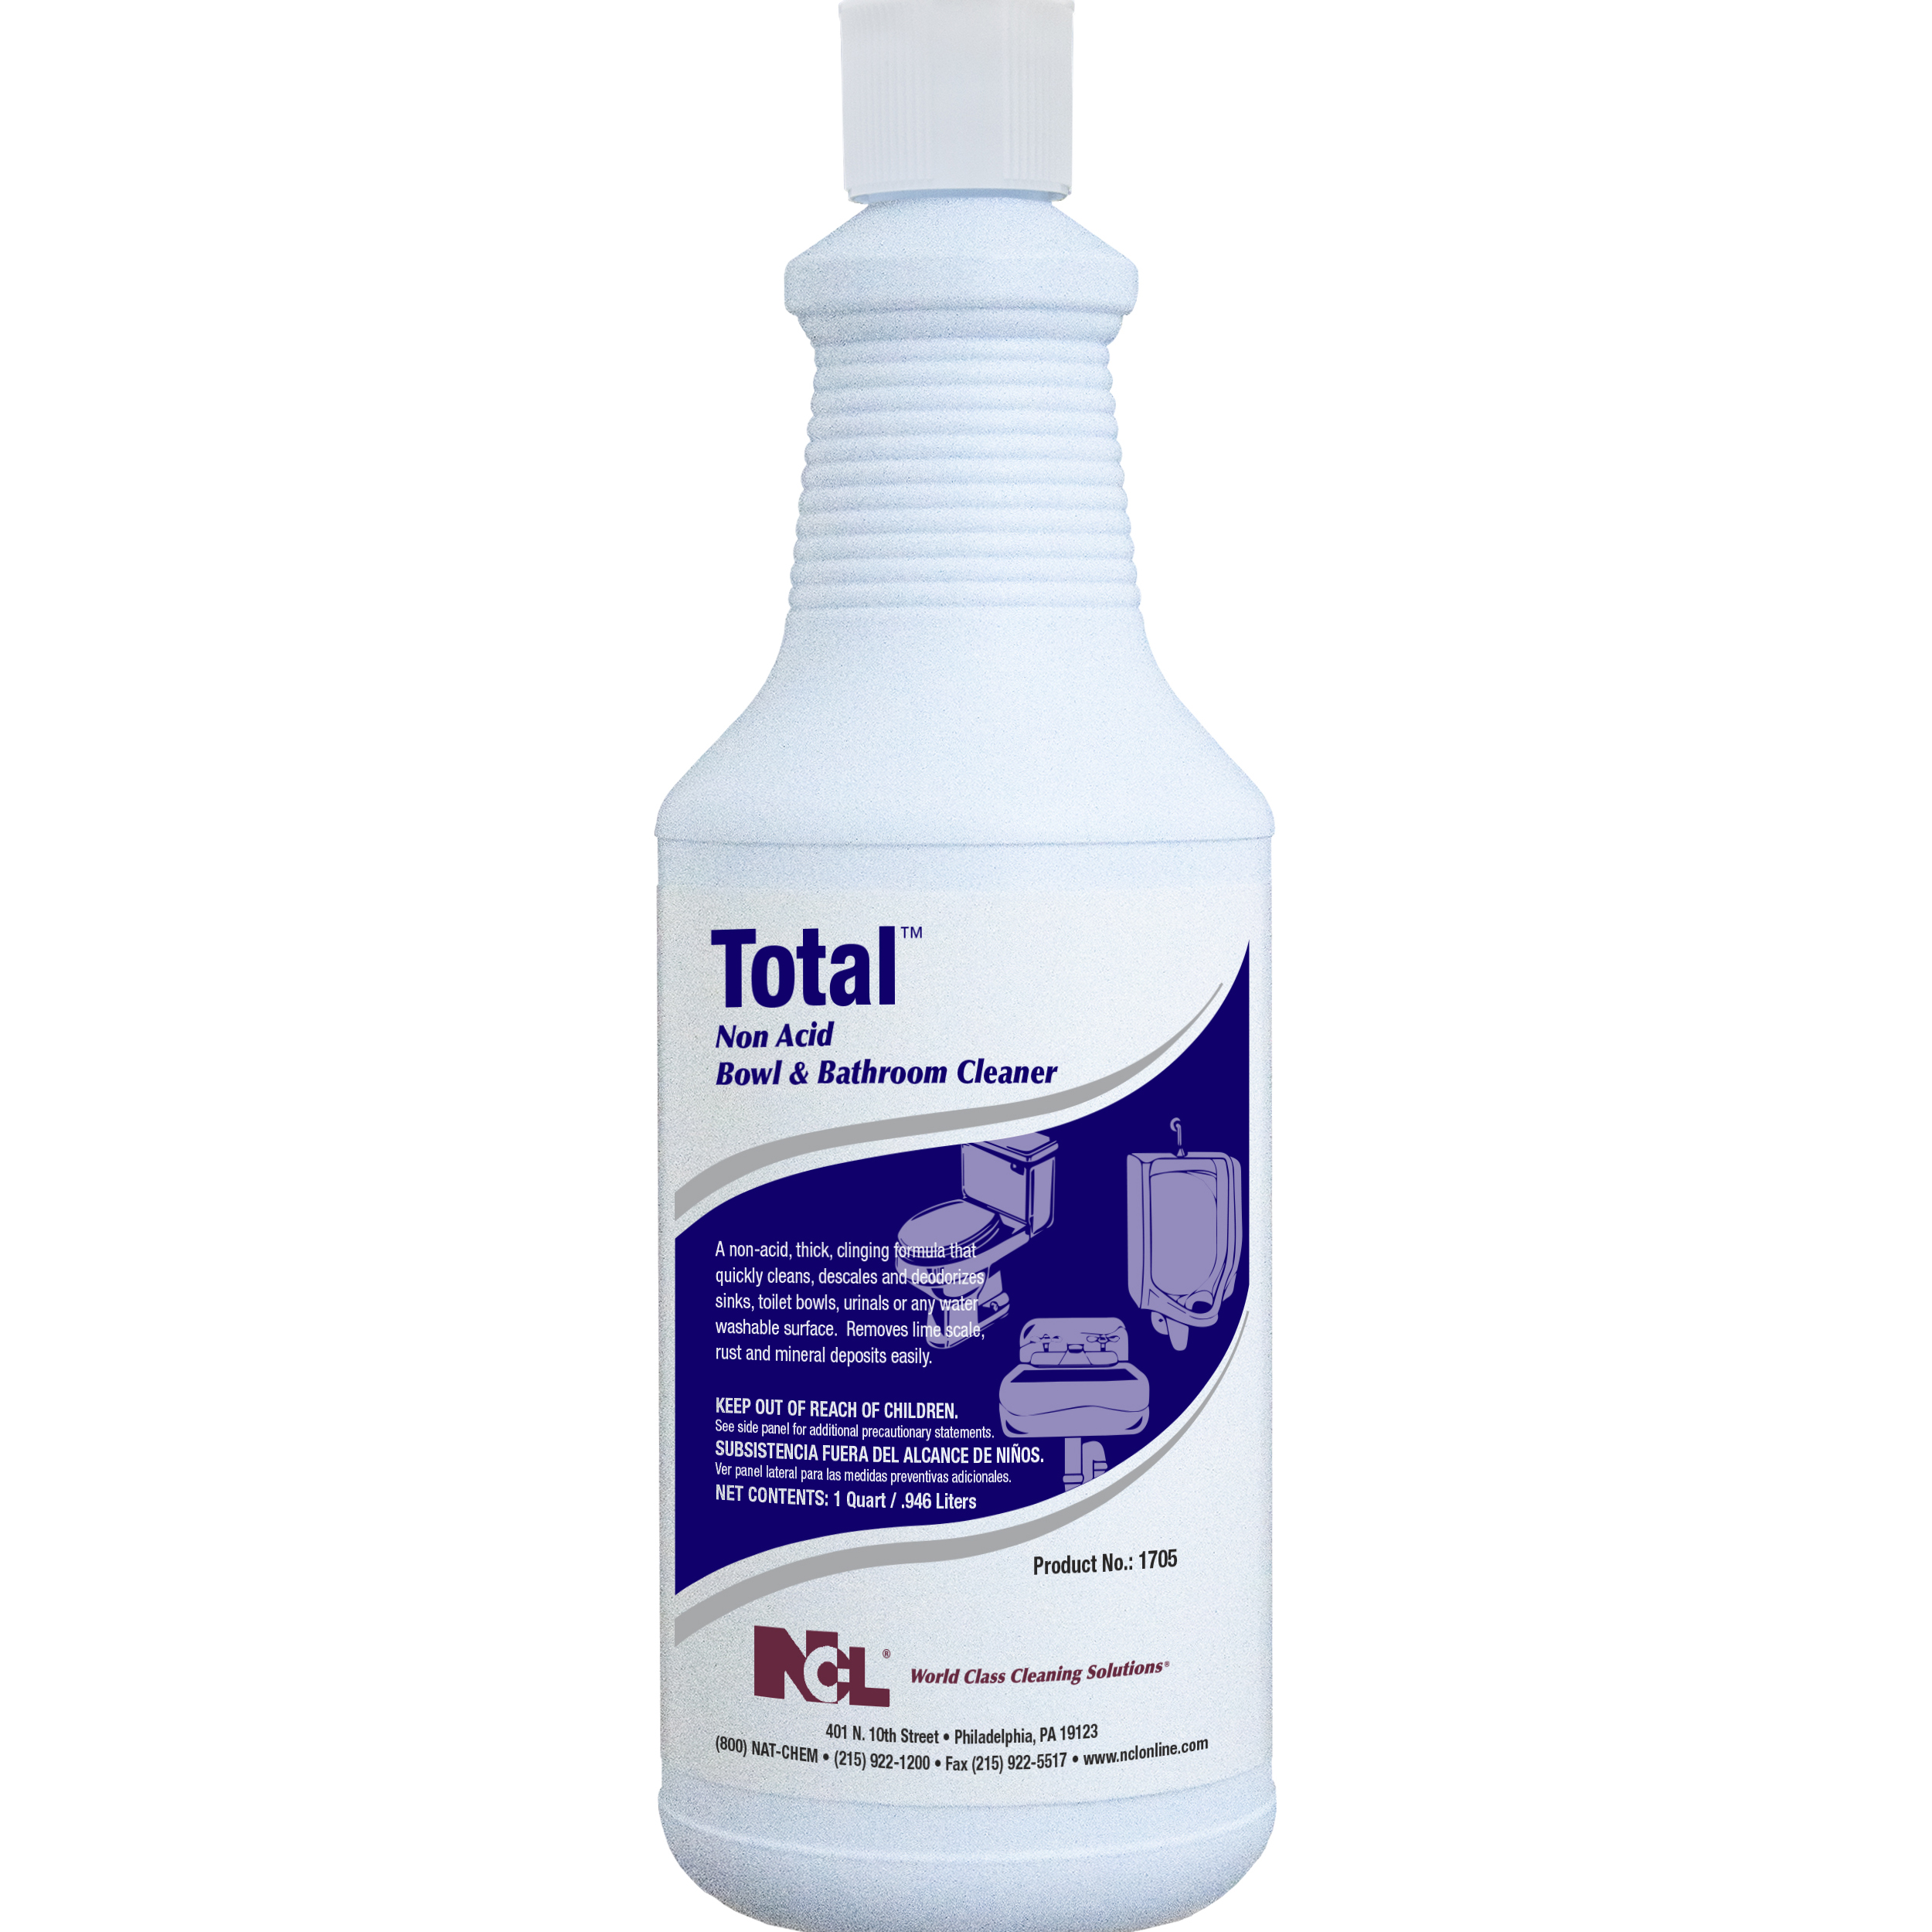  TOTAL Non-Acid Bowl & Bathroom Cleaner 12/32 oz (1 Qt.) Case (NCL1705-45) 